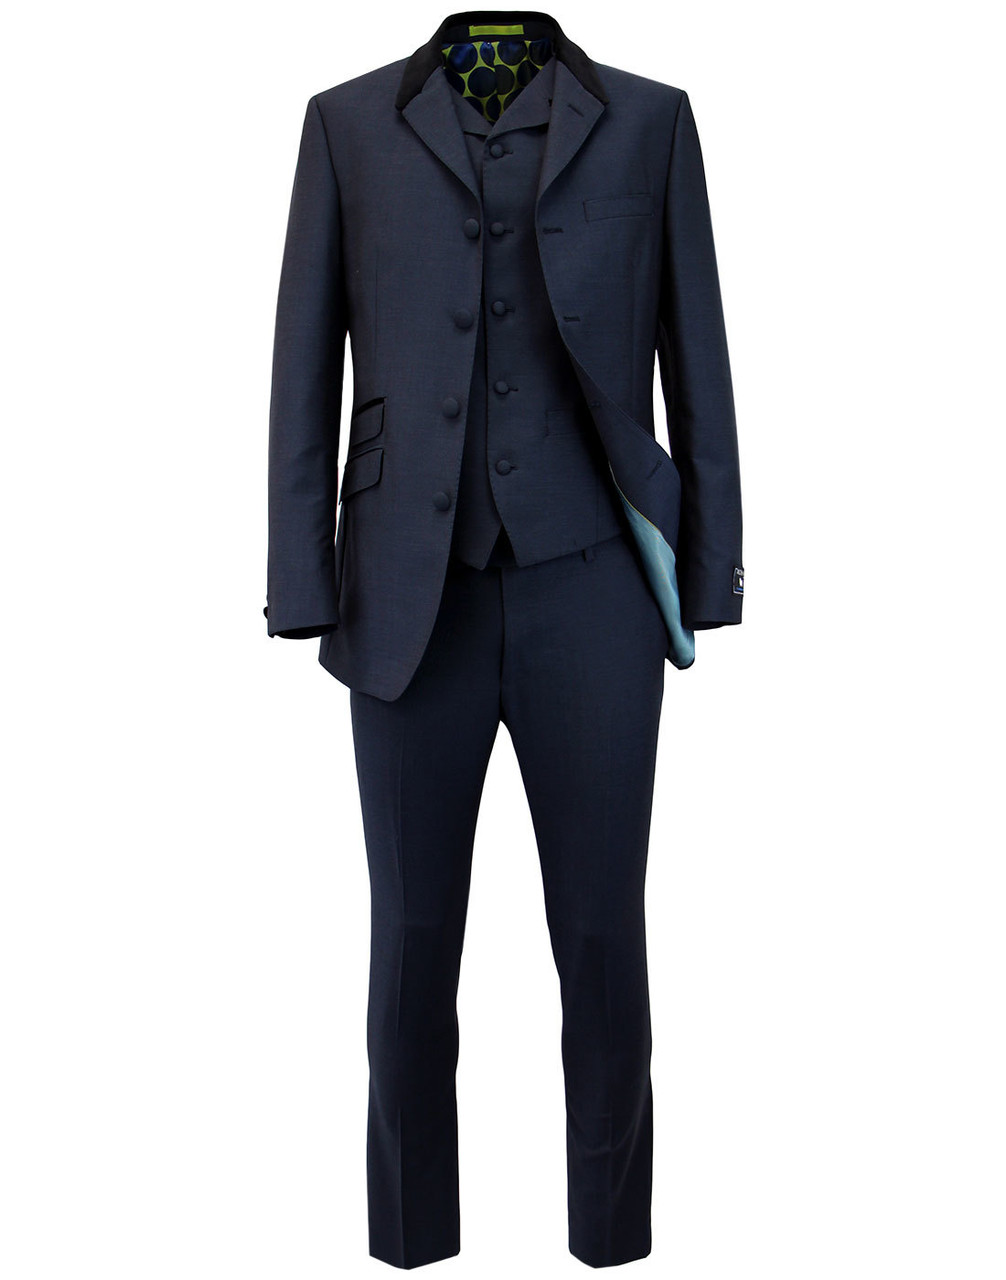 John Dalton classic grey herringbone 3 piece suit